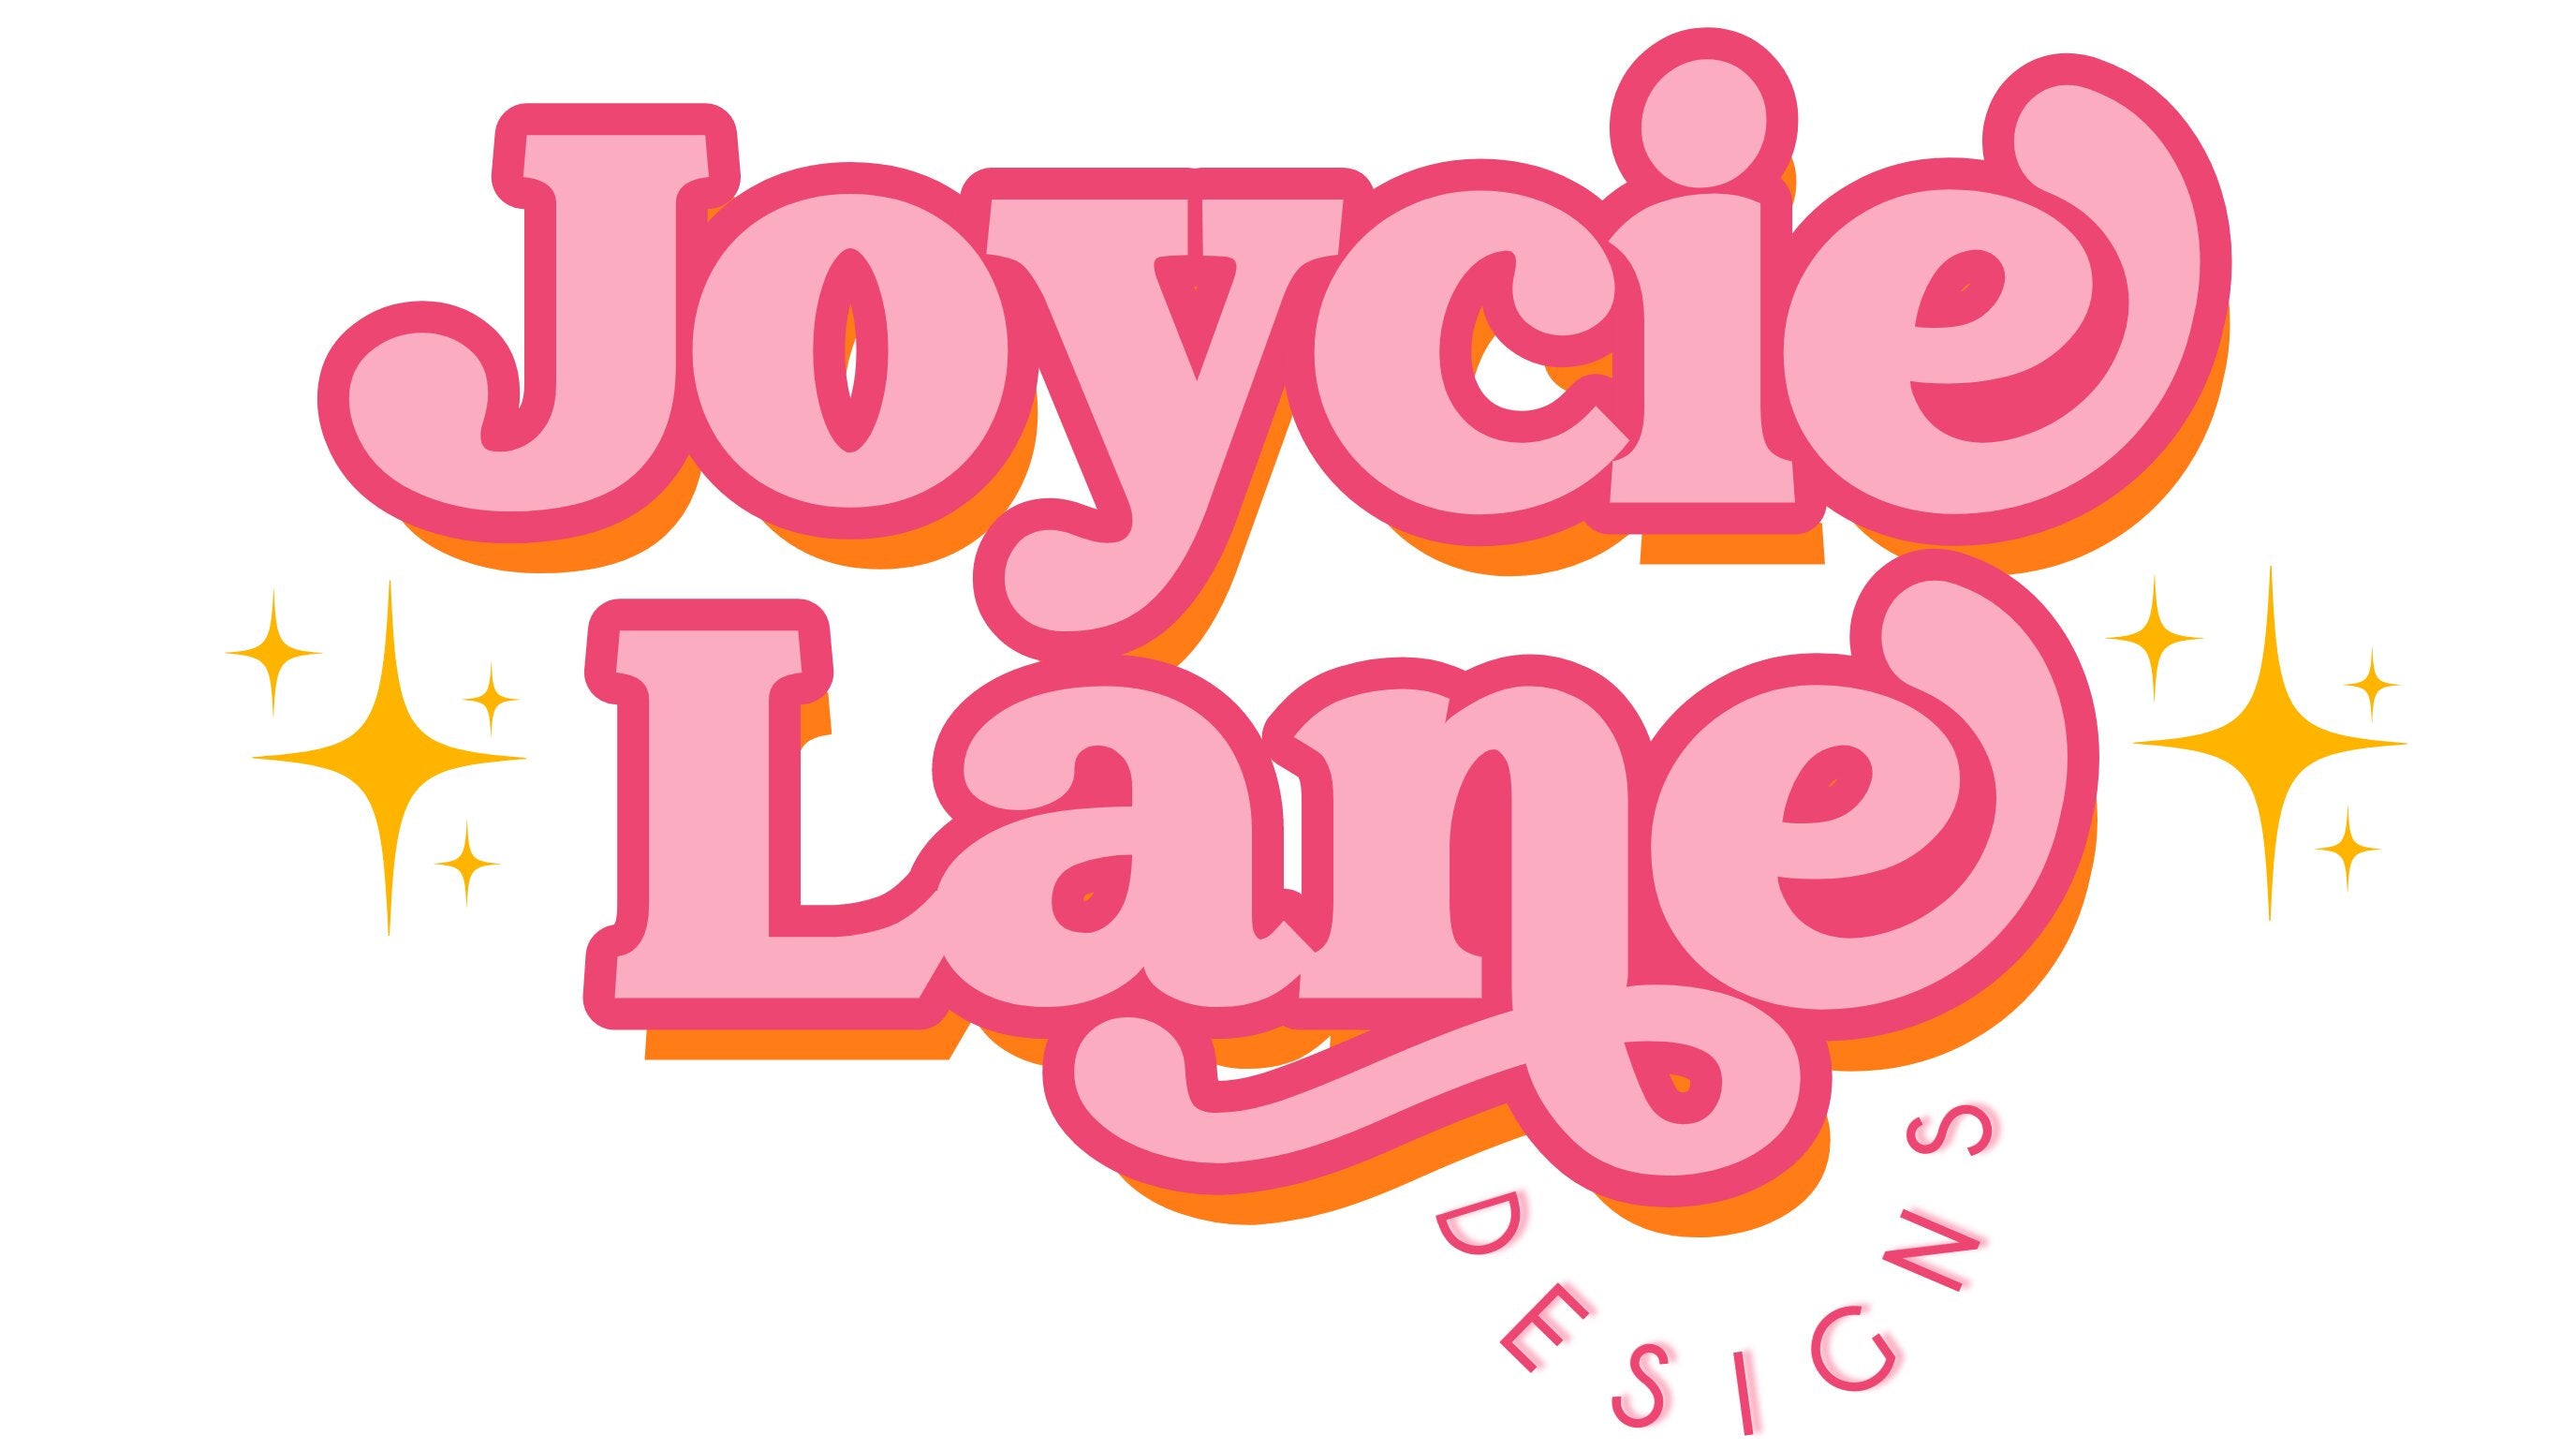 Joycie Lane Designs